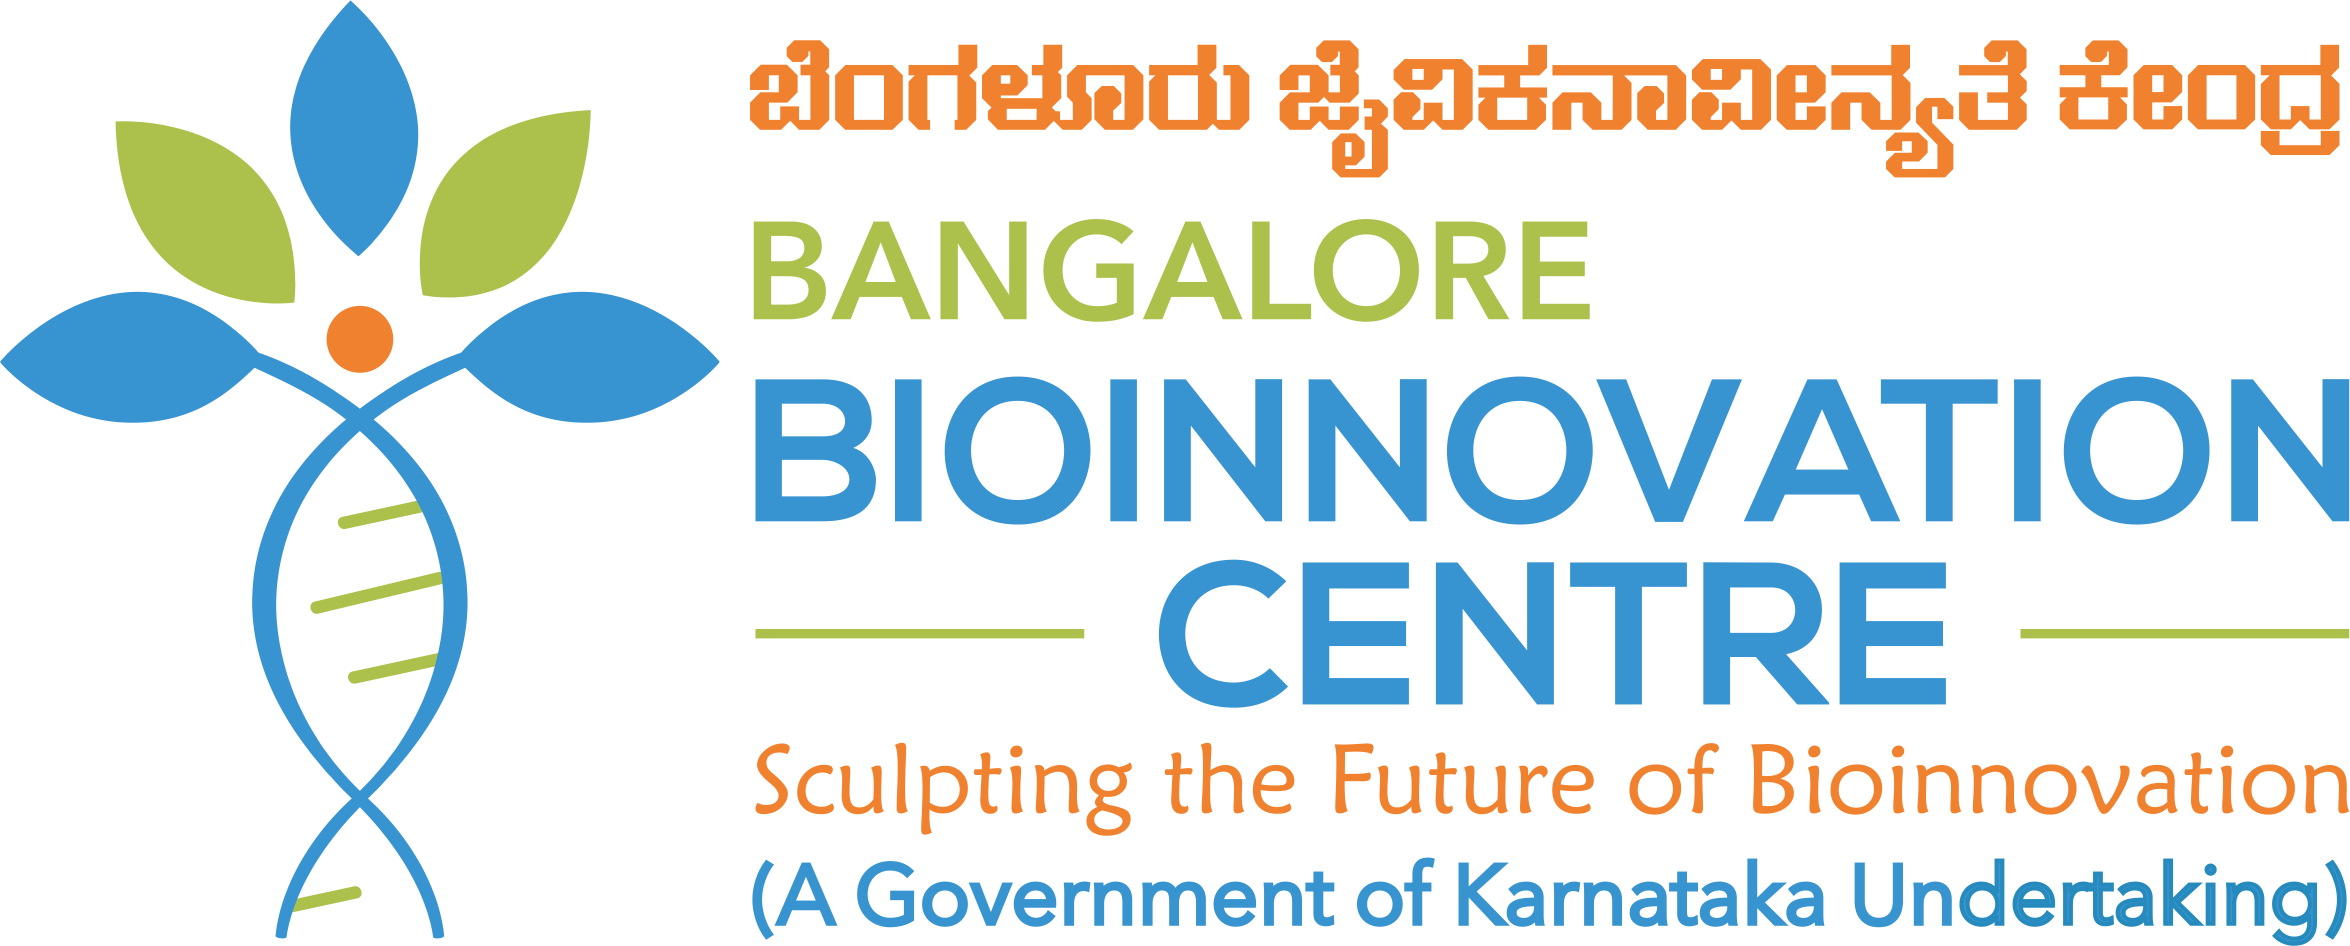 Bangalore Bioinnovation Centre